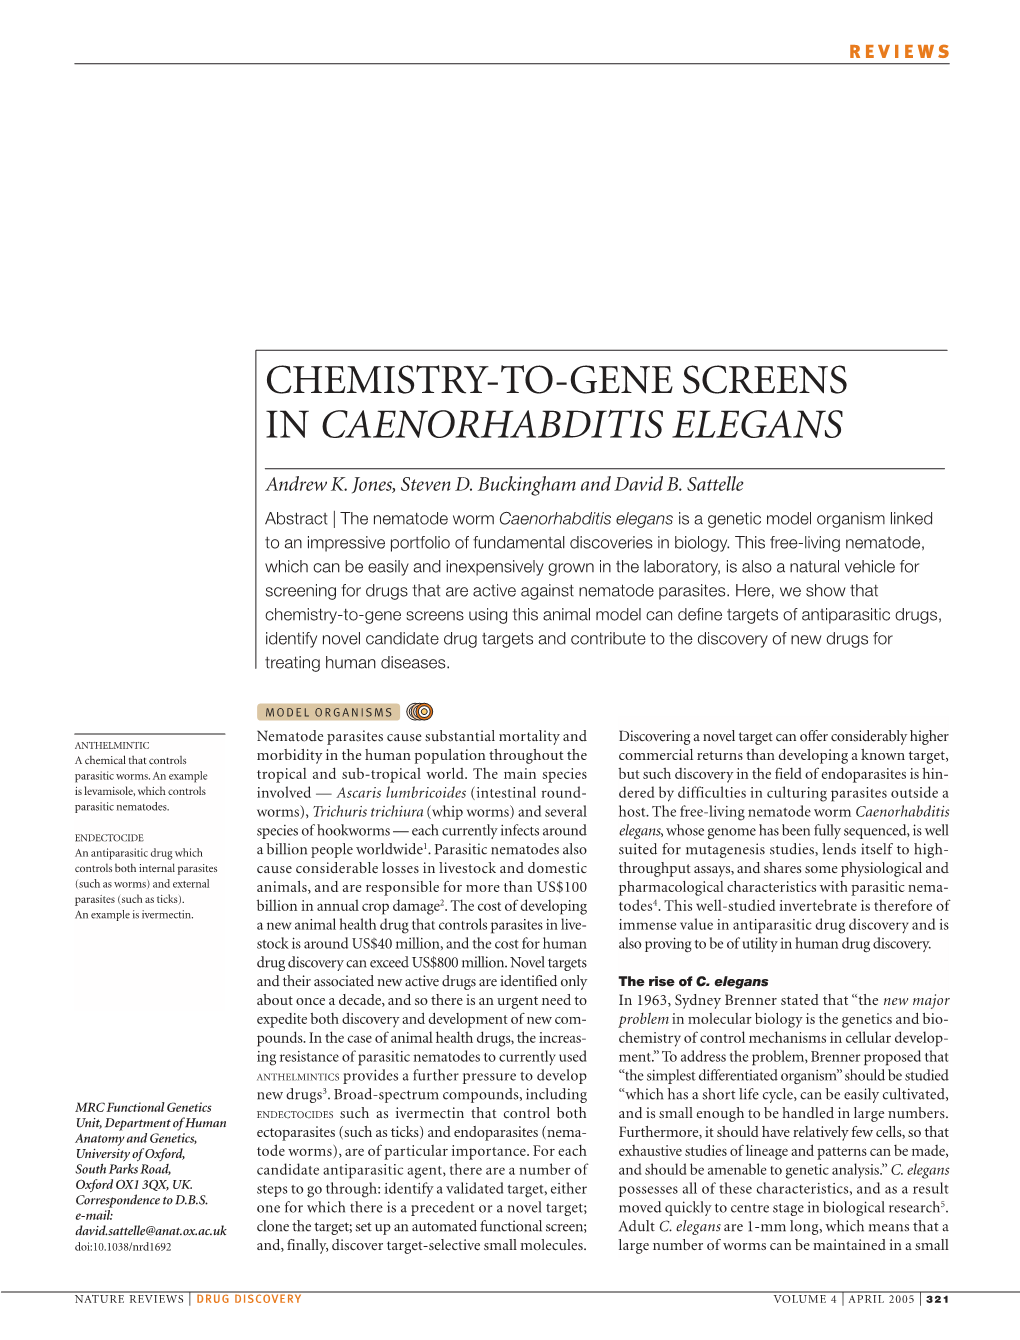 Chemistry-To-Gene Screens in Caenorhabditis Elegans